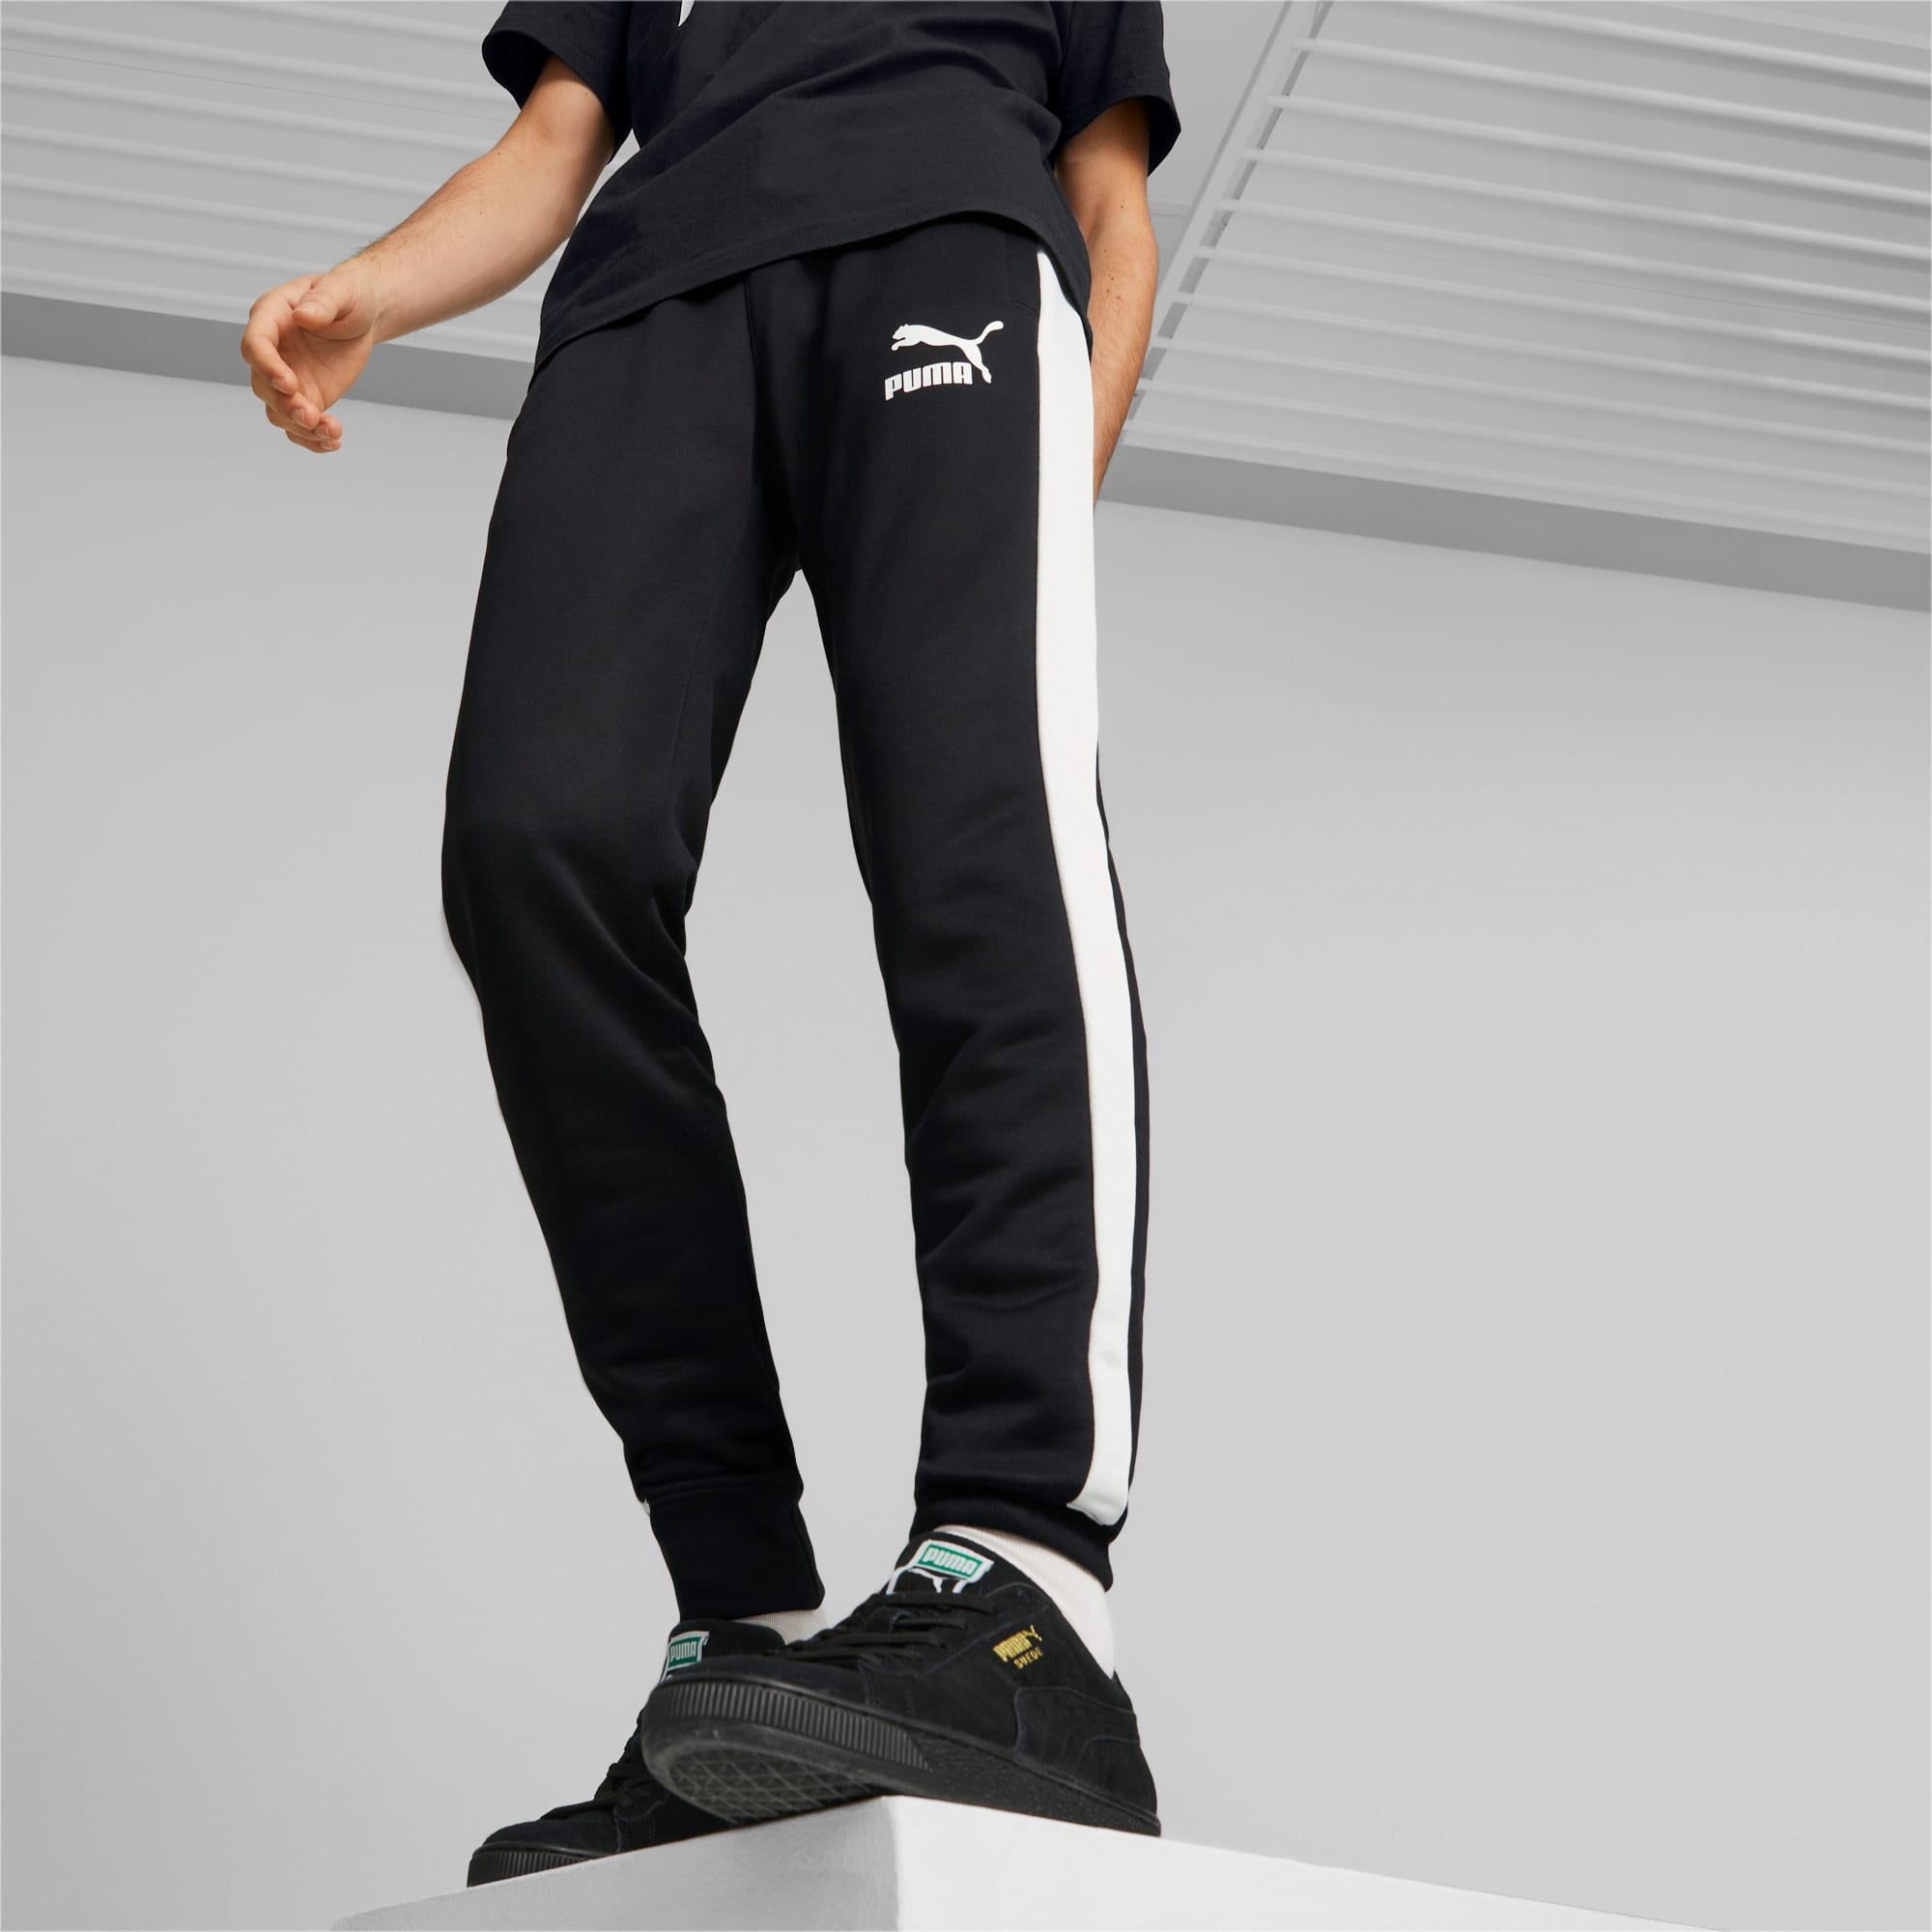 Puma Black Active Pants Size XL - 59% off